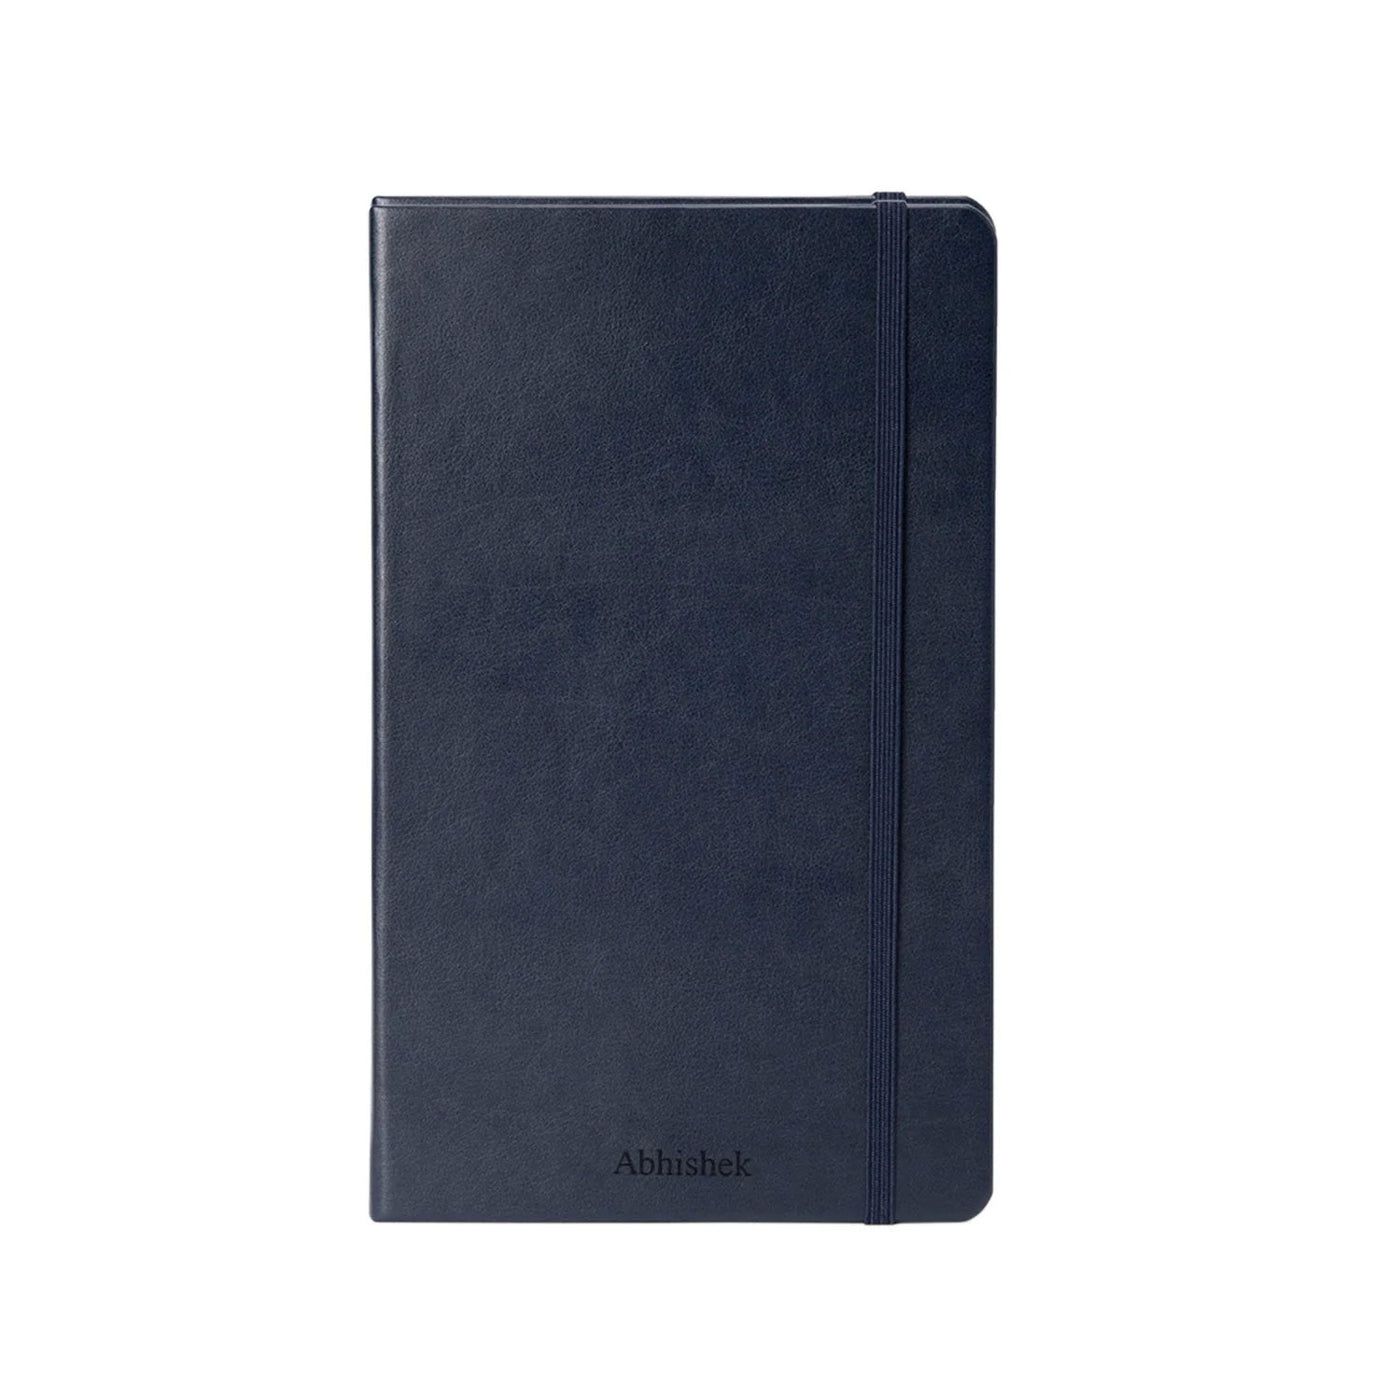 Pennline Waltz Hard Cover Notebook Blue - Ruled 4